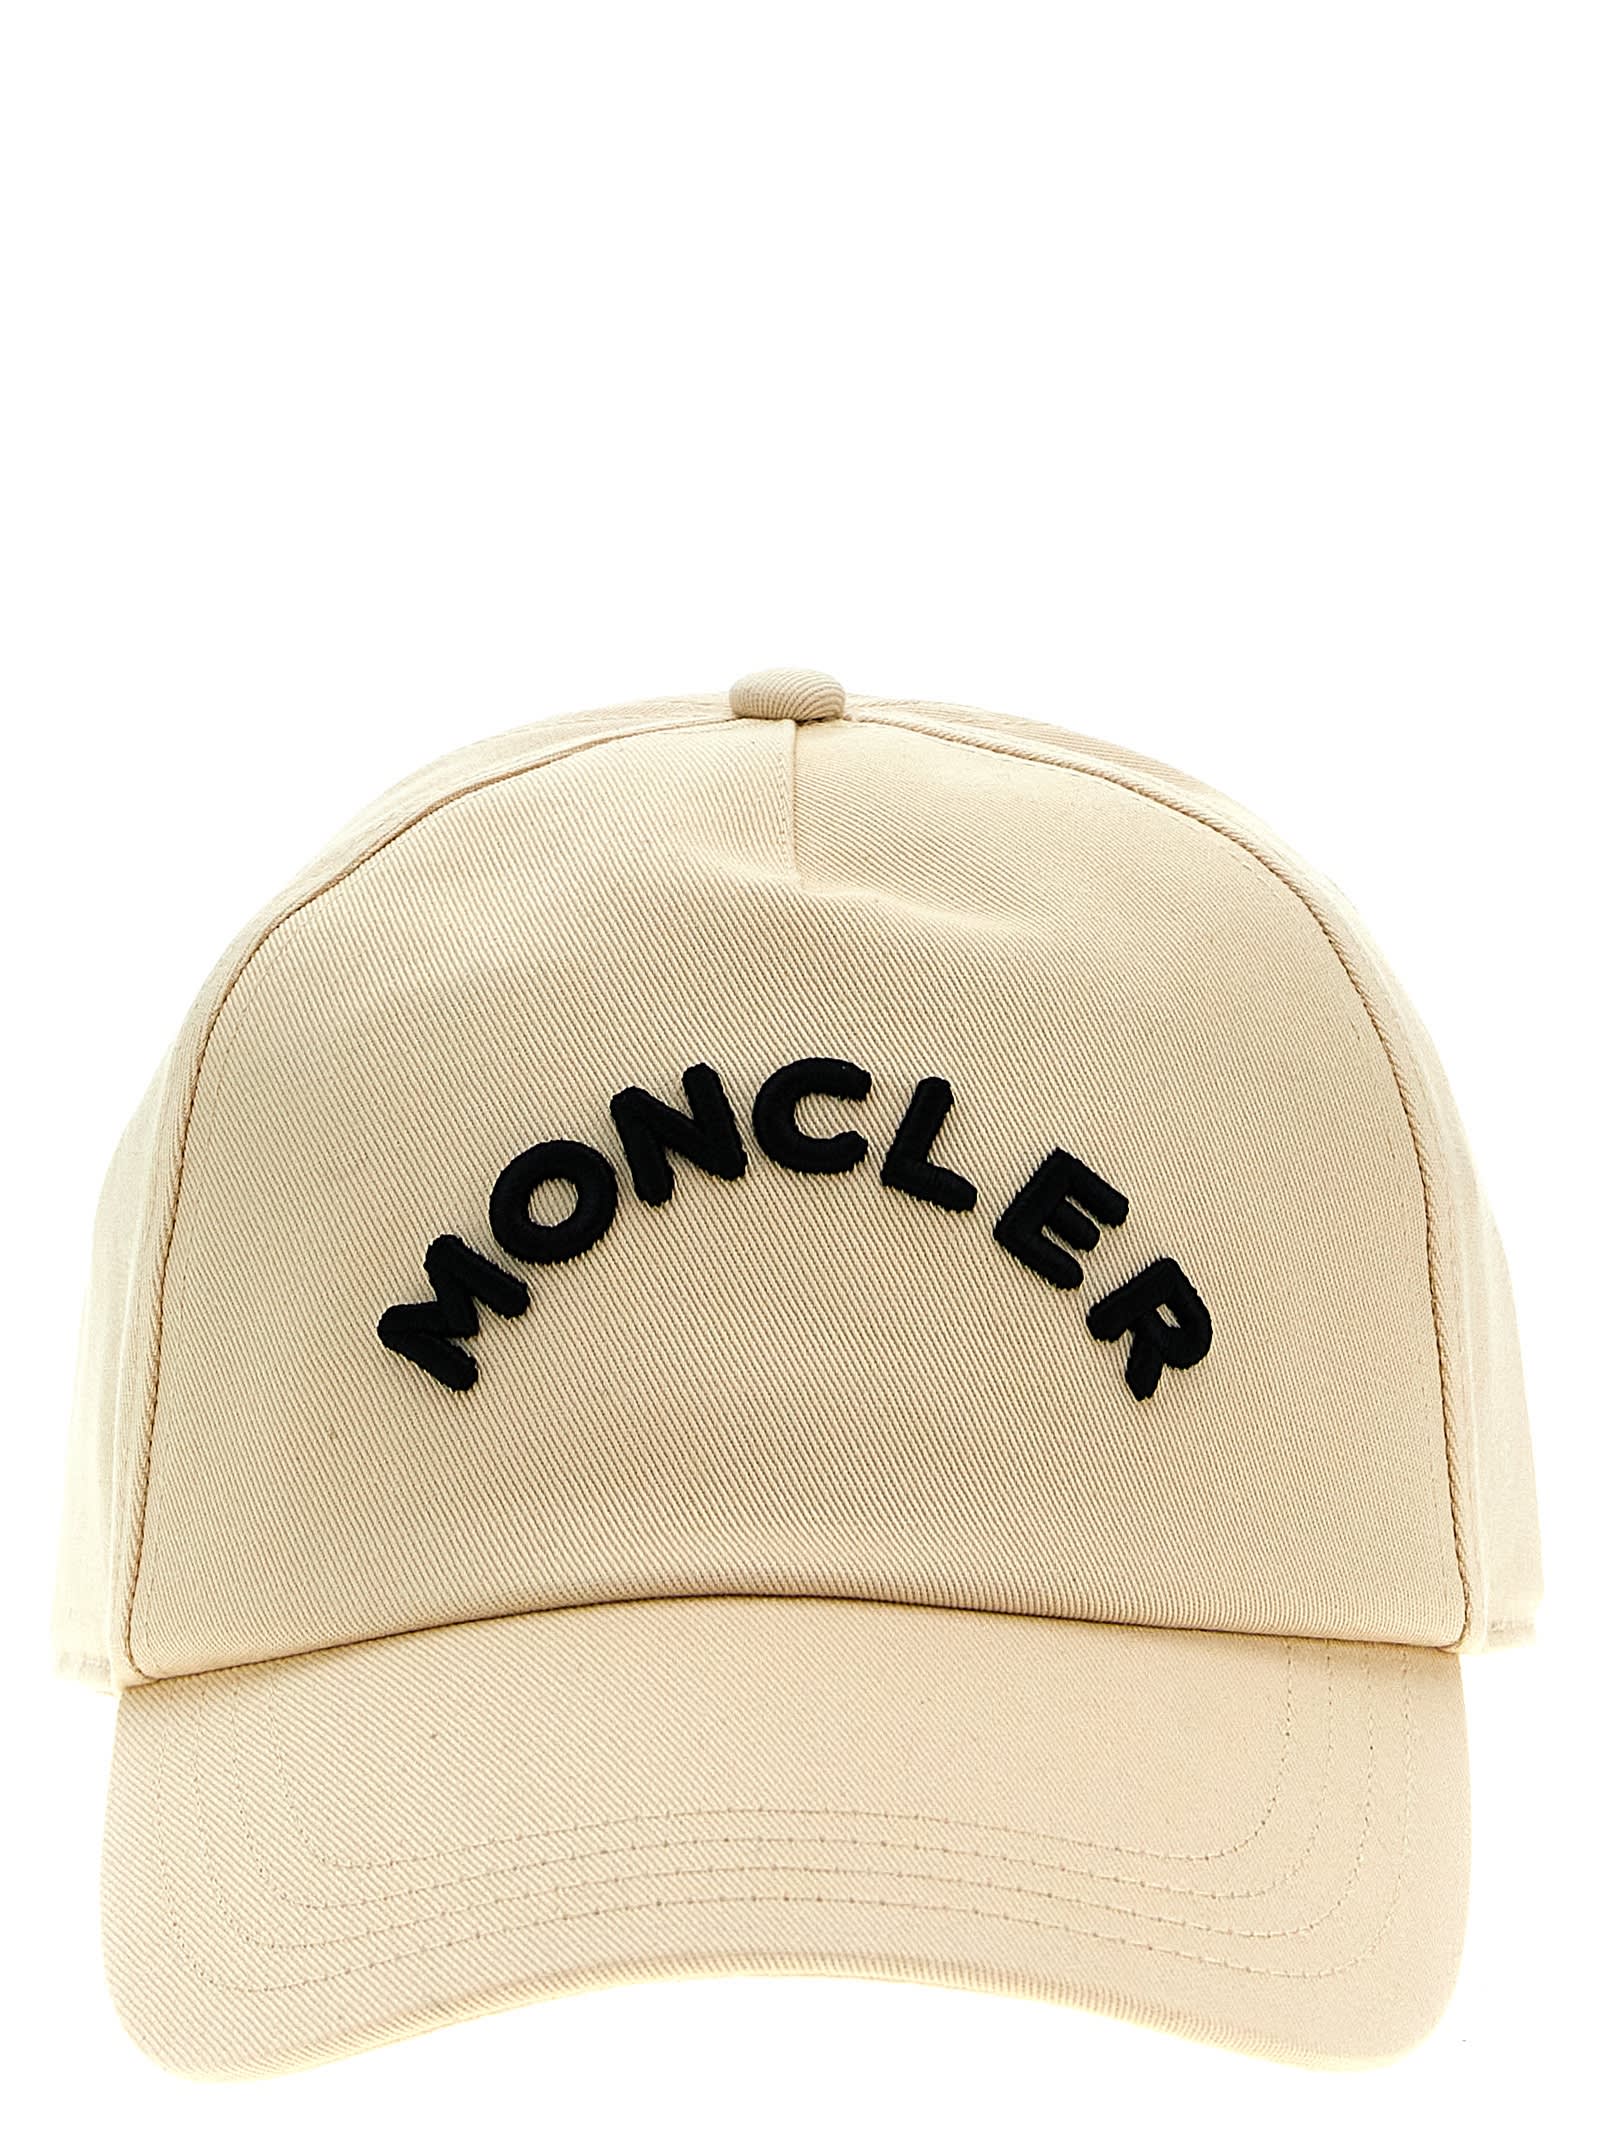 Moncler Logo Cap